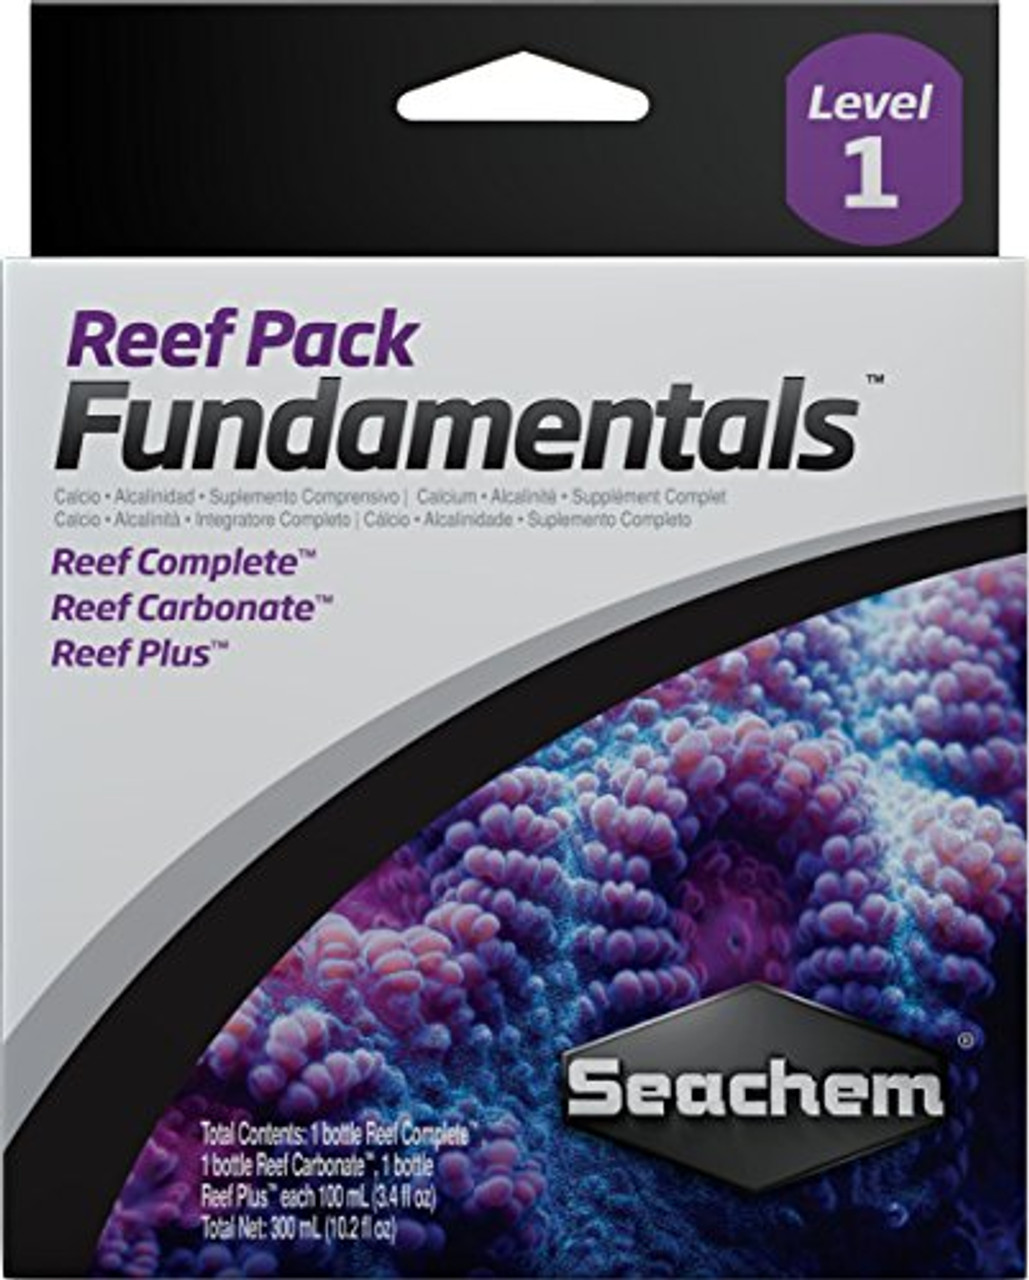 Seachem Reef Pack Fundamentals Front of Box